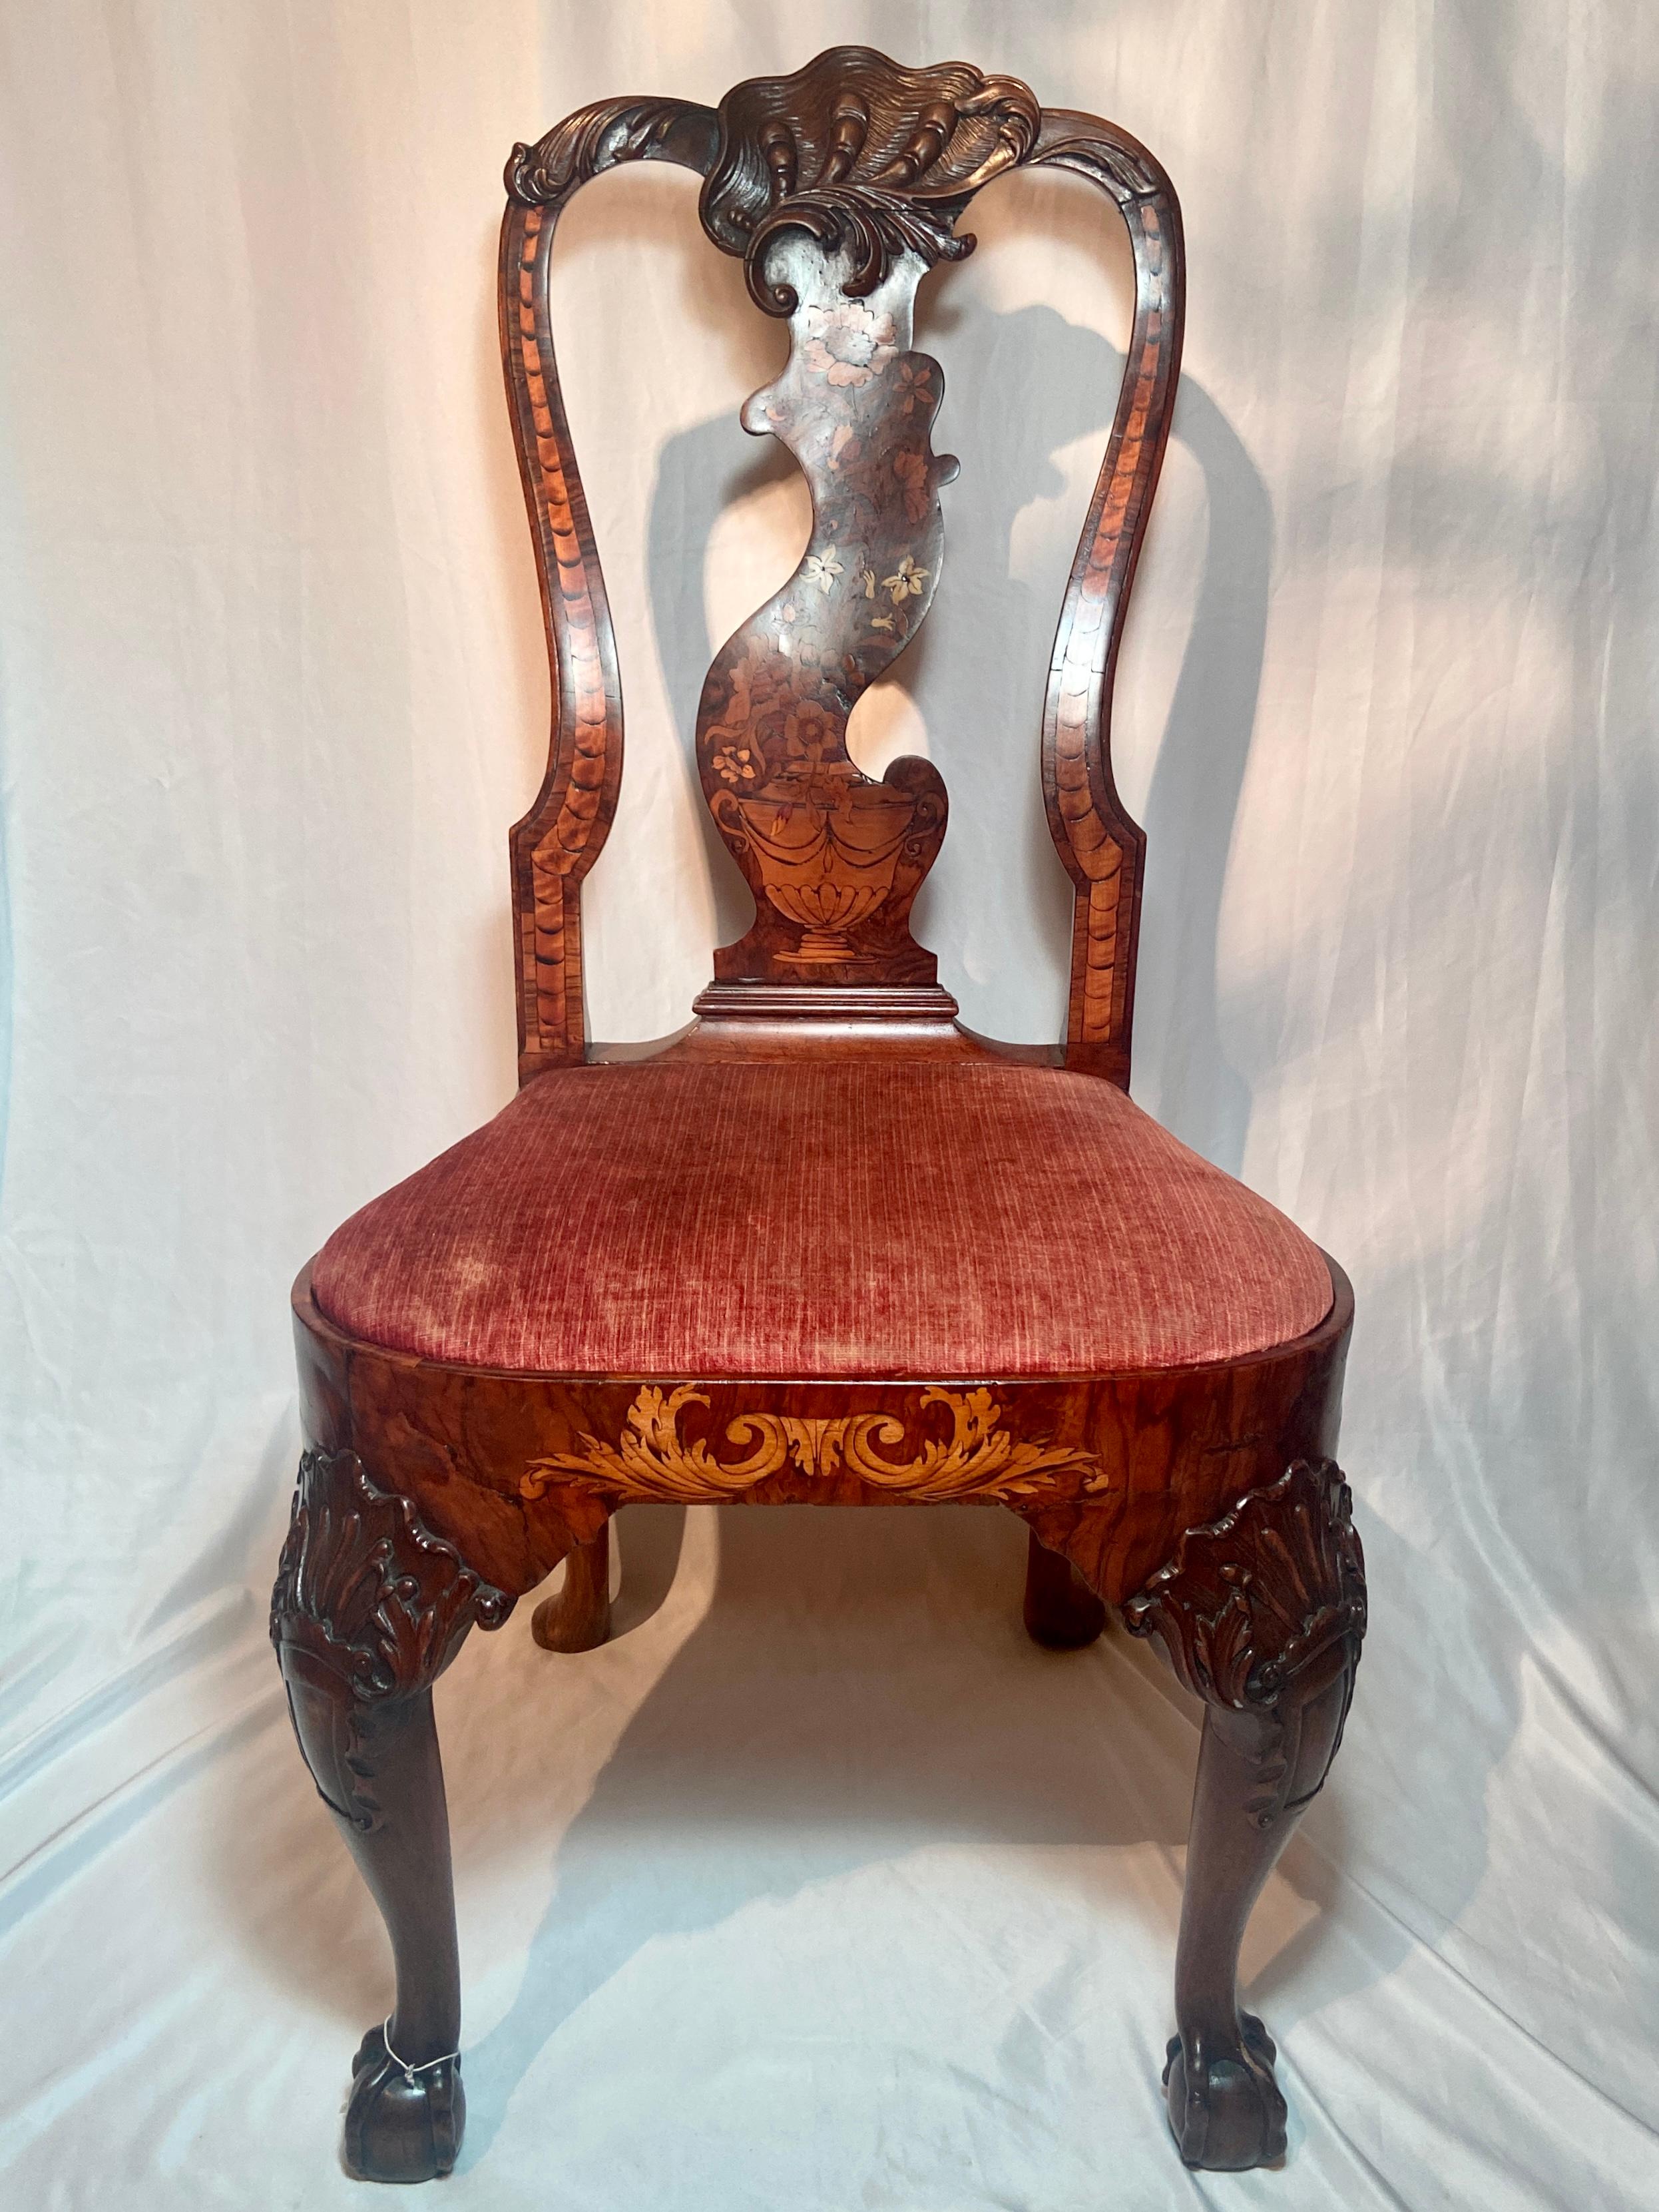 Pair Antique 18th century Dutch Marquetry Inlay Queen Anne side chairs, Circa 1710-1730.